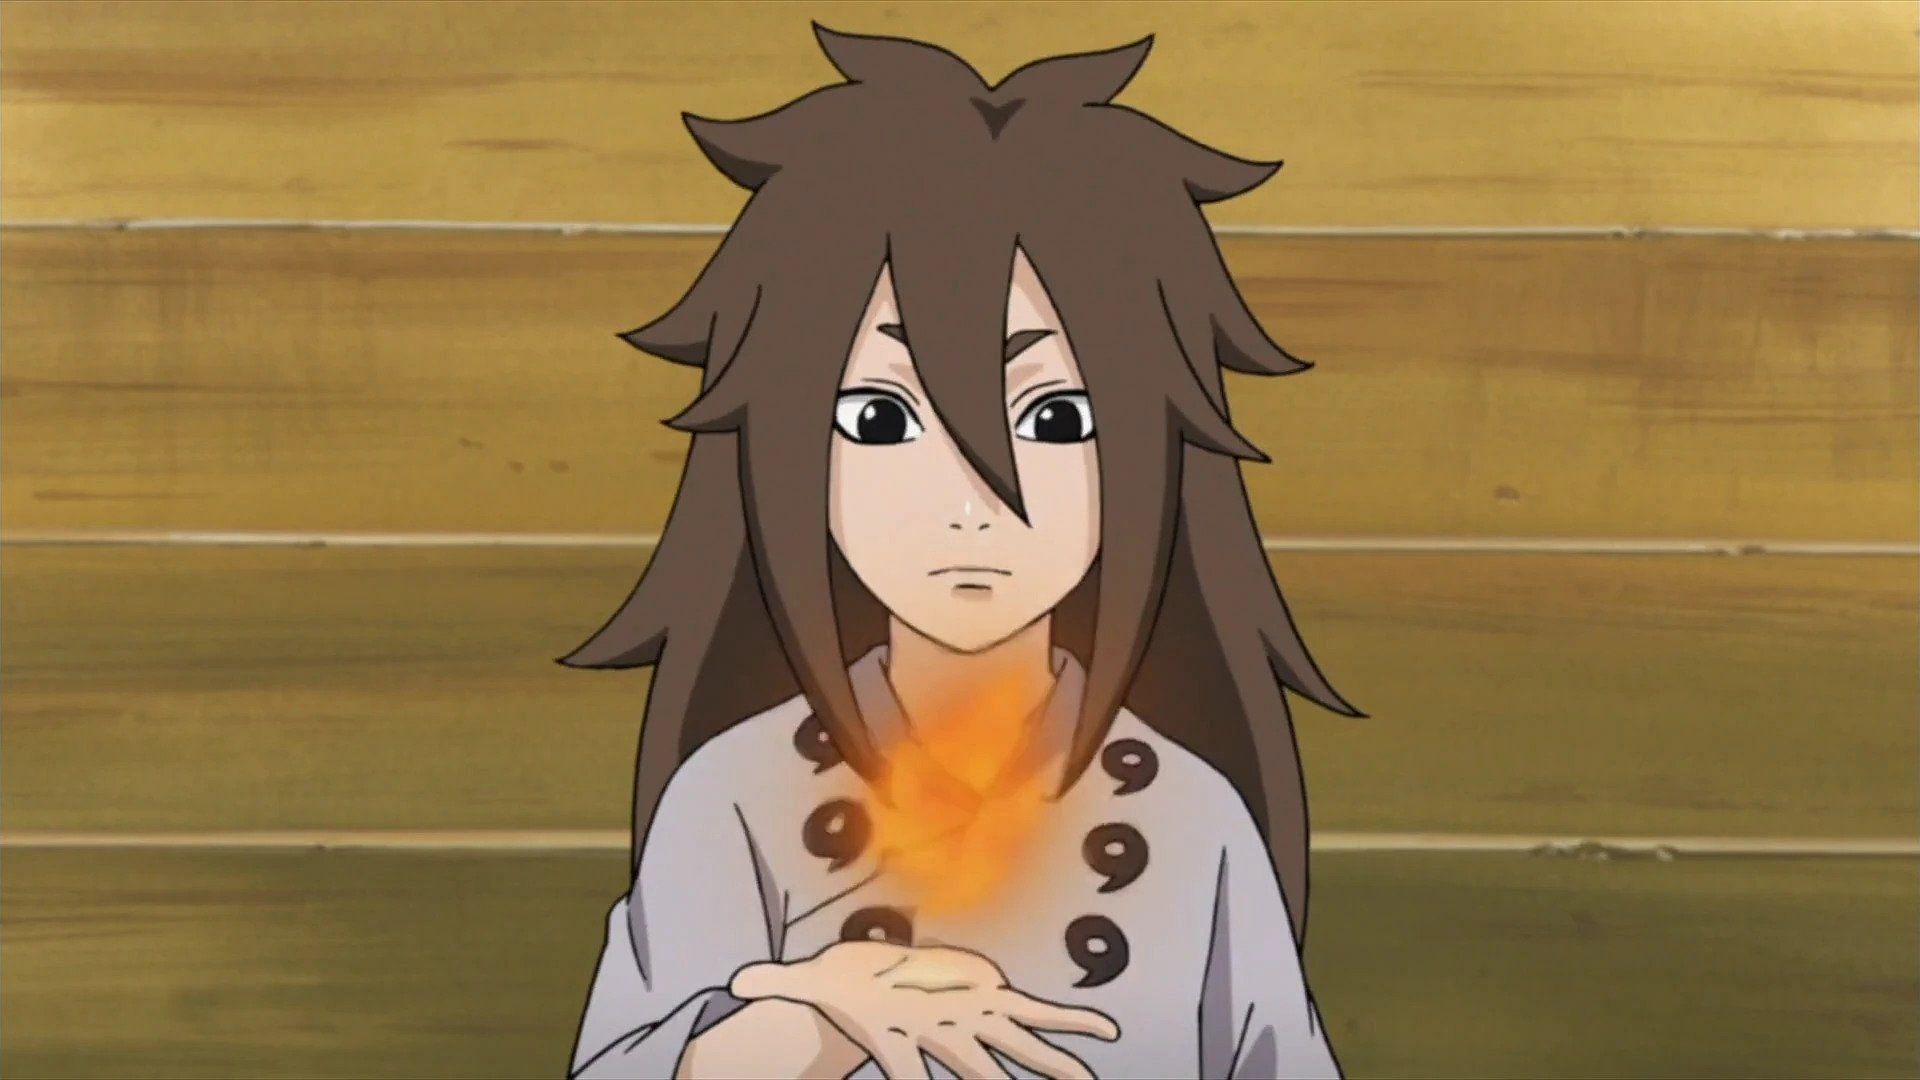 Indra Otsutsuki as seen in Naruto (Image via Studio Pierrot)